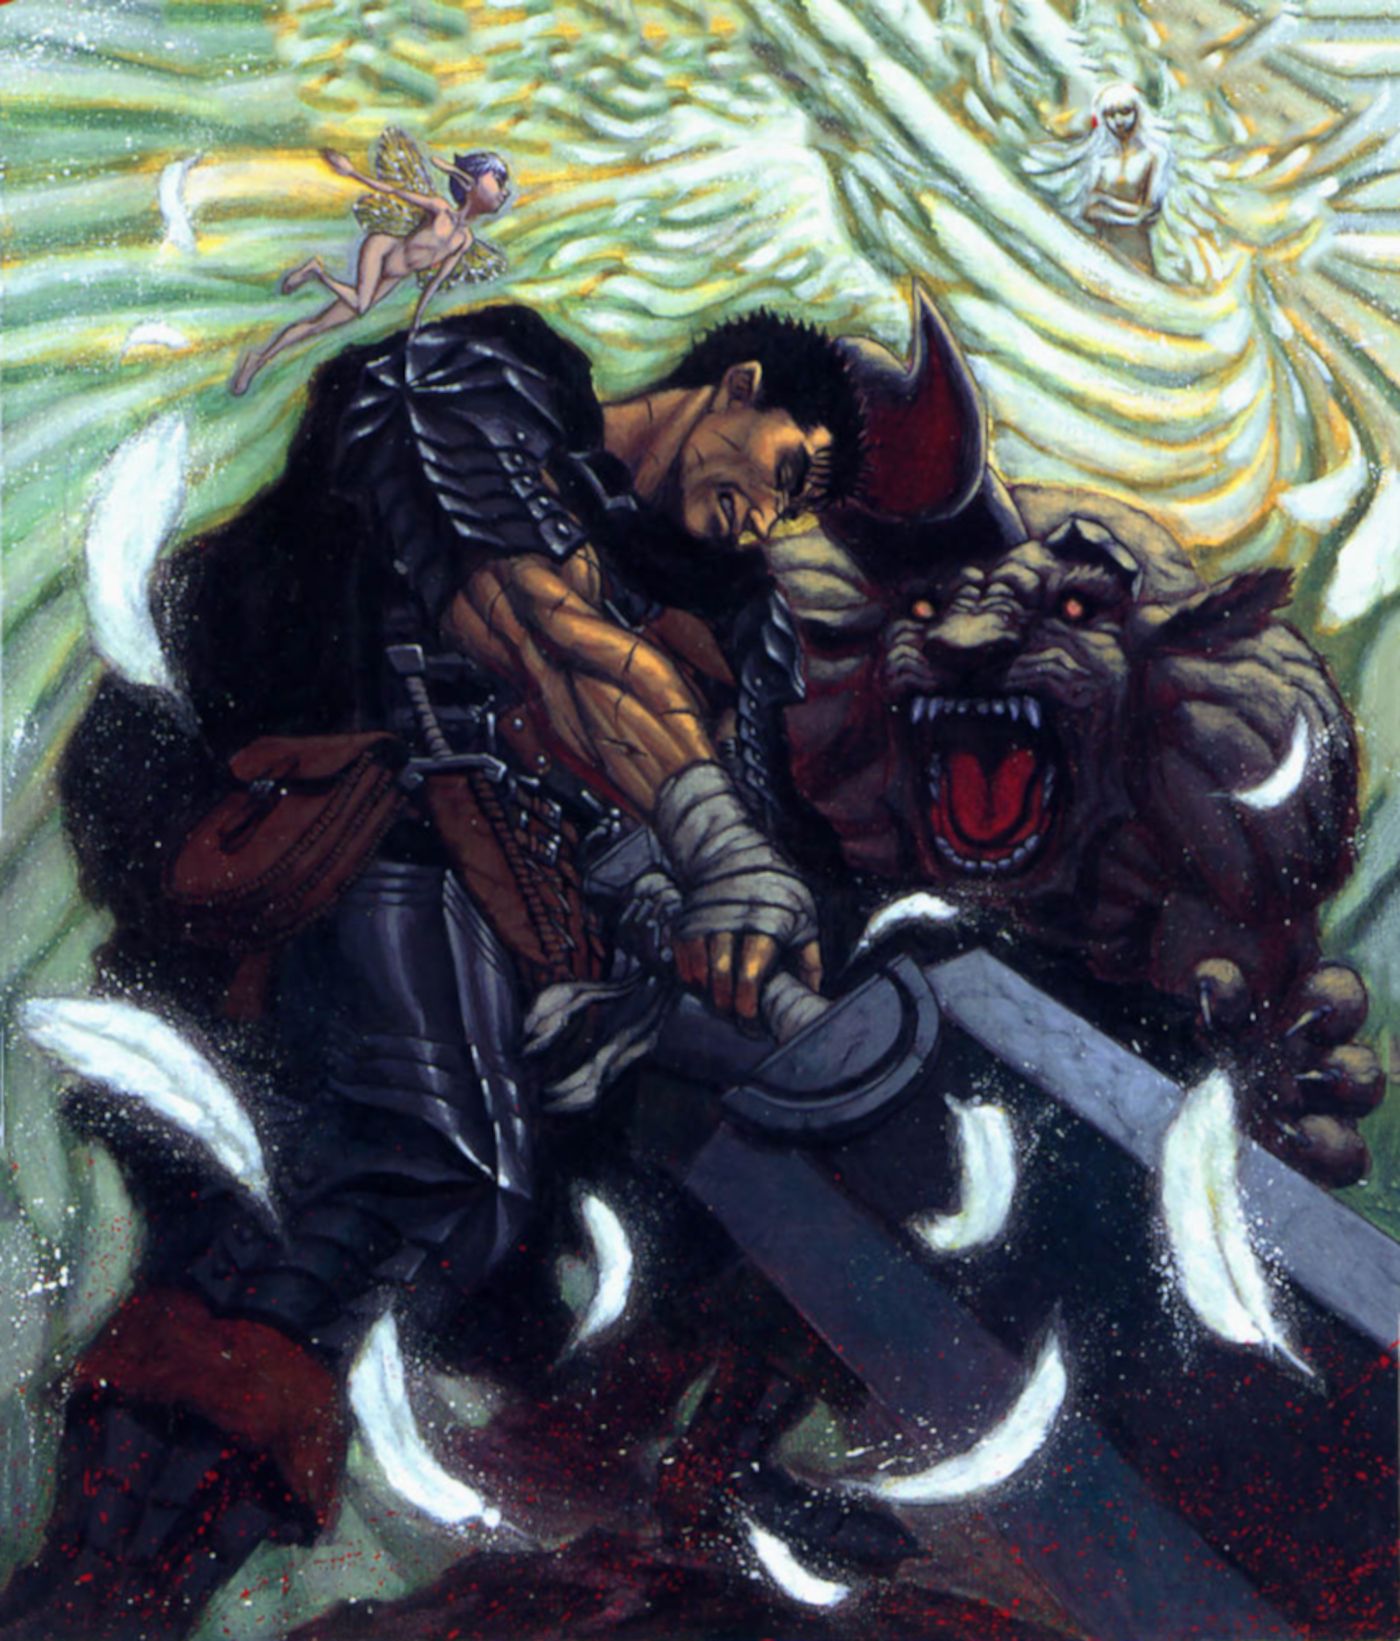 Arte da capa de Berserk Vol 18 retratando Guts Fighting Zodd